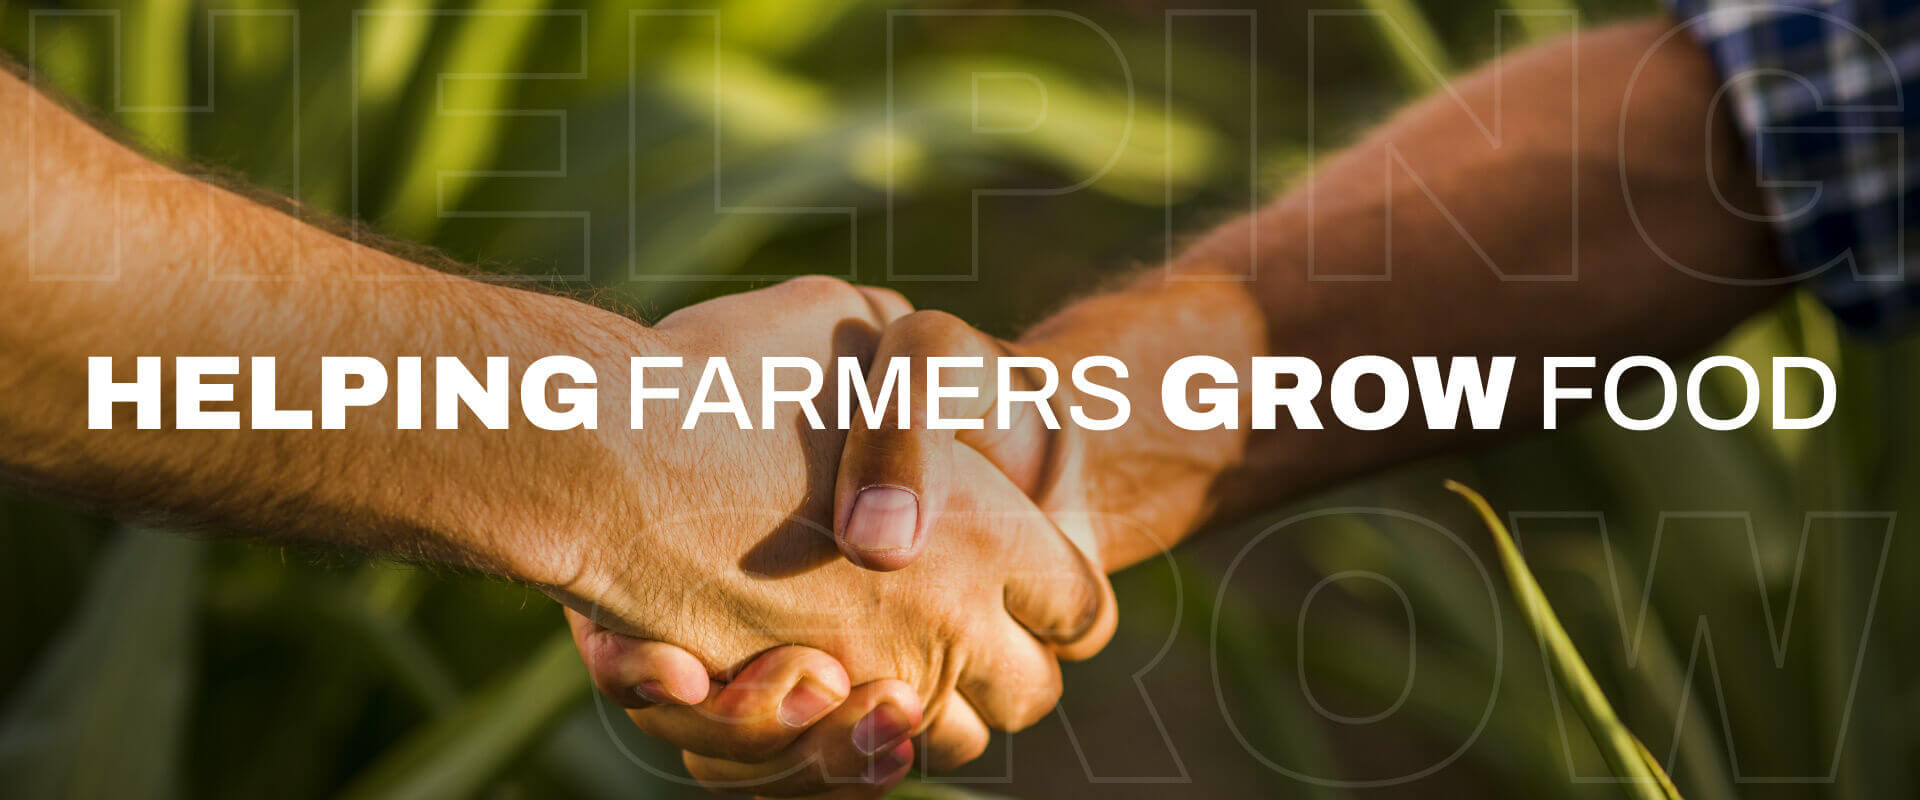 Helping Farmers Grow Food